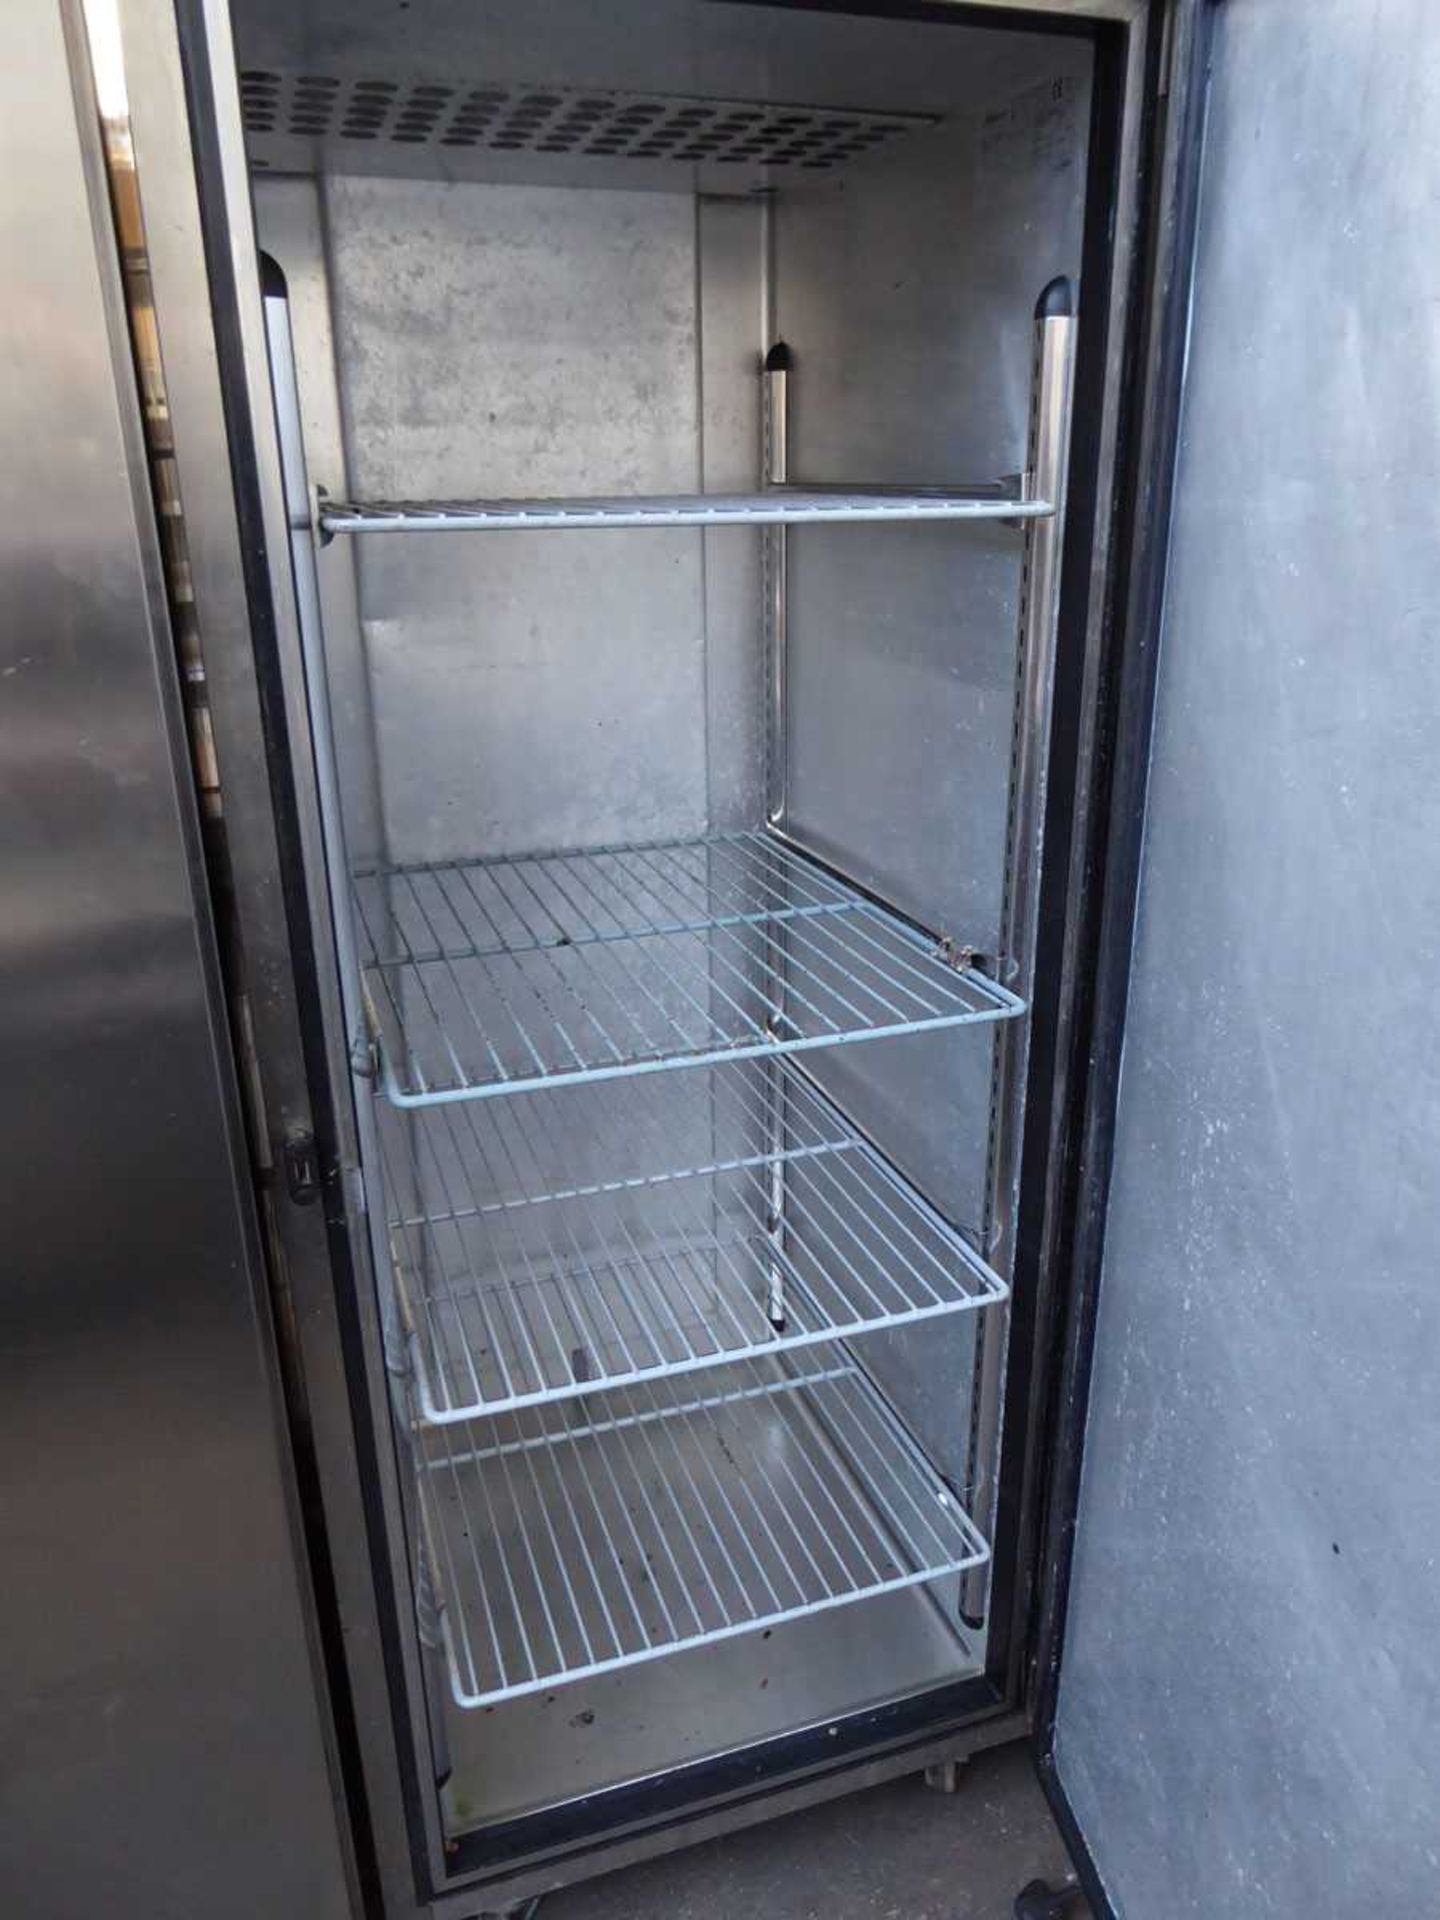 70cm Foster model PROG600H-A single door fridge - Image 2 of 2